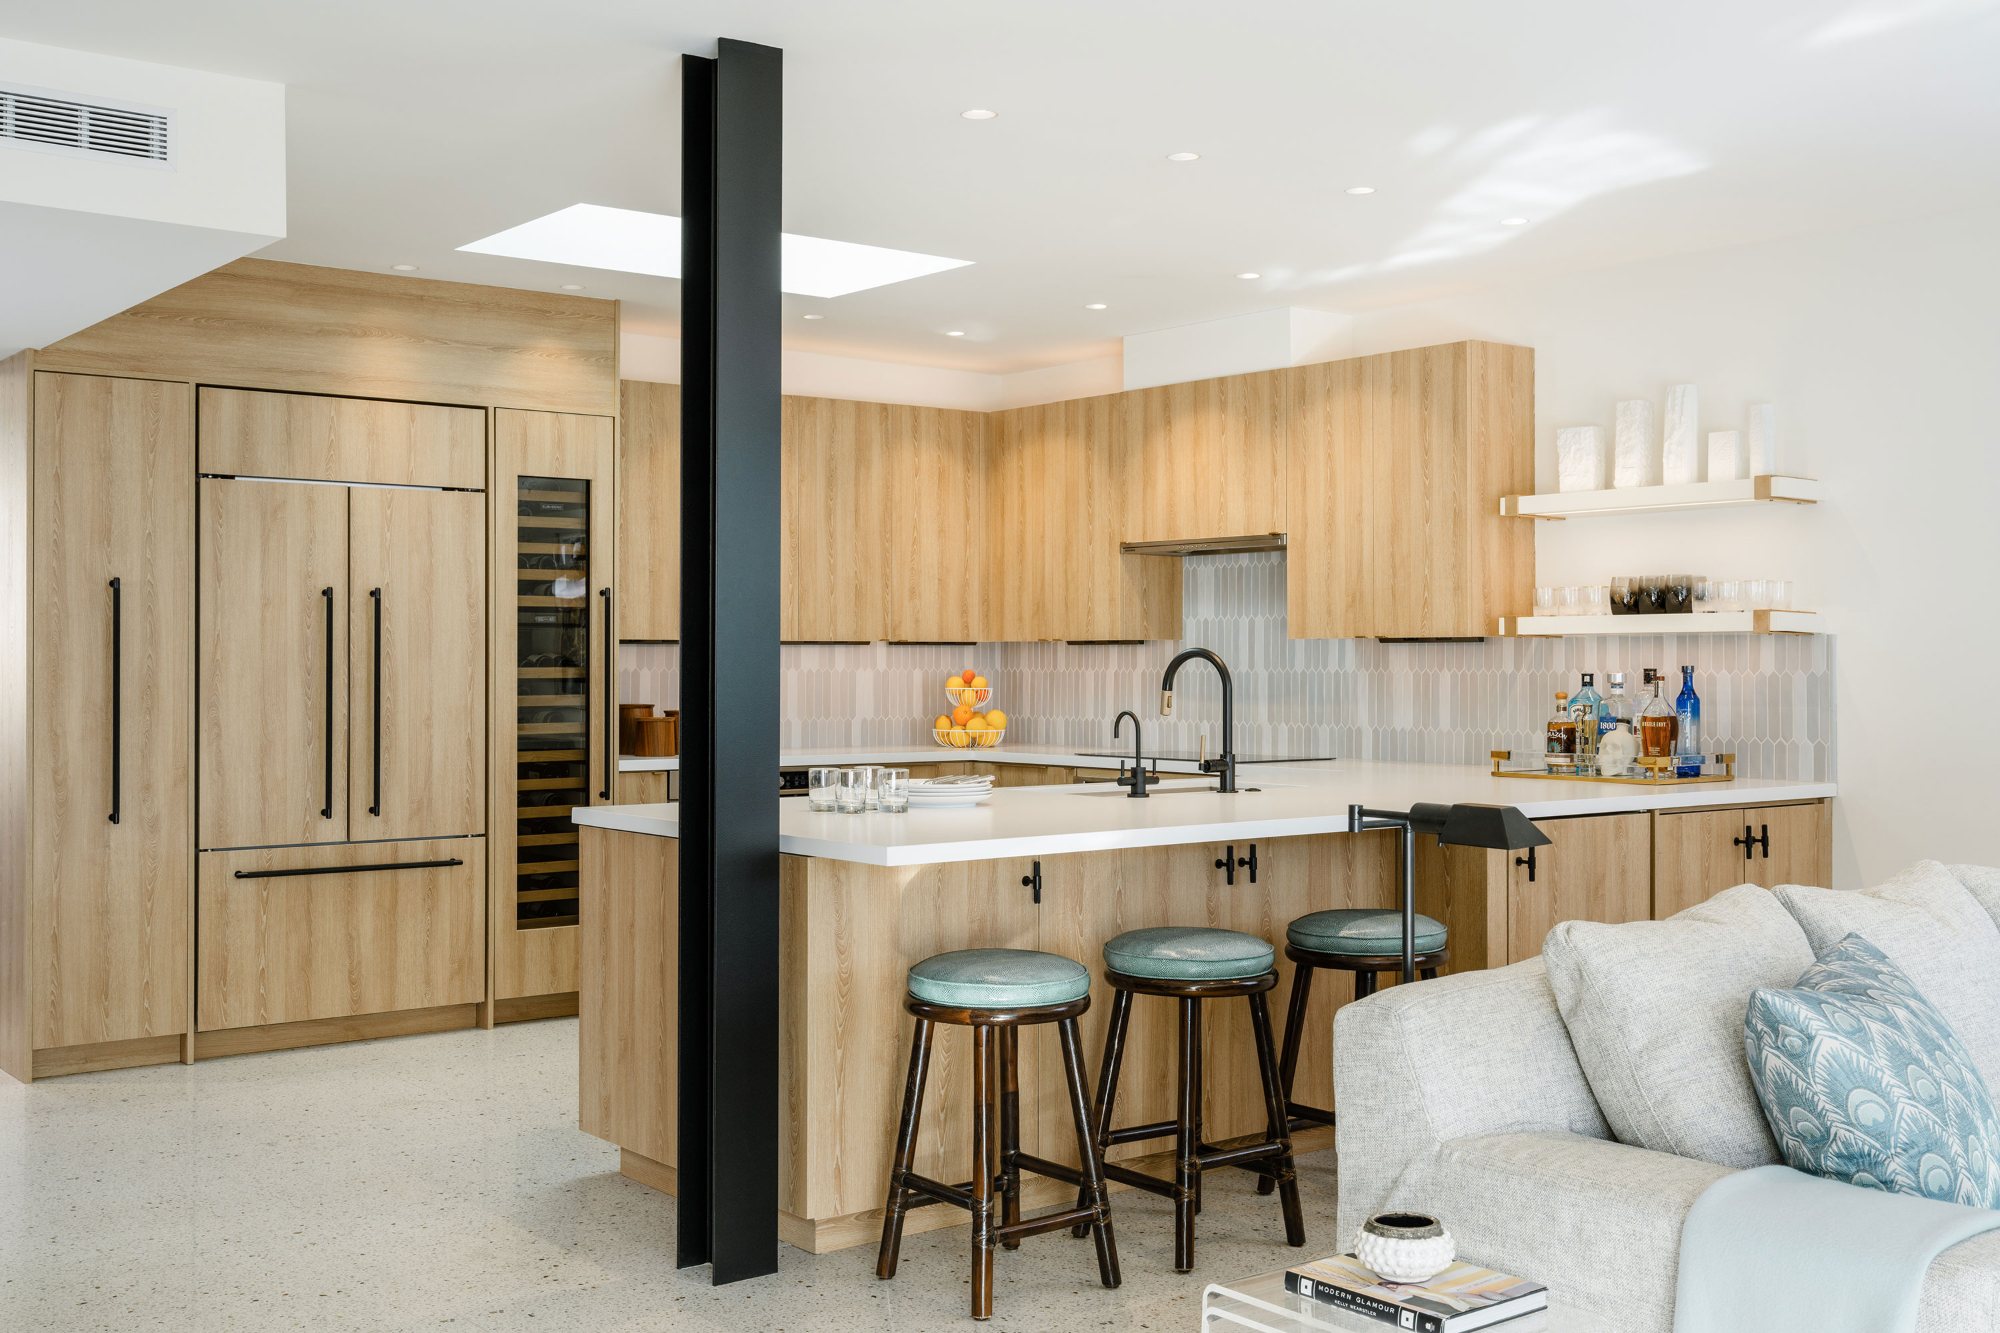 Image 26 of Kitchen 2a in The interior designer Staci Munic designs her dream home using Silestone - Cosentino